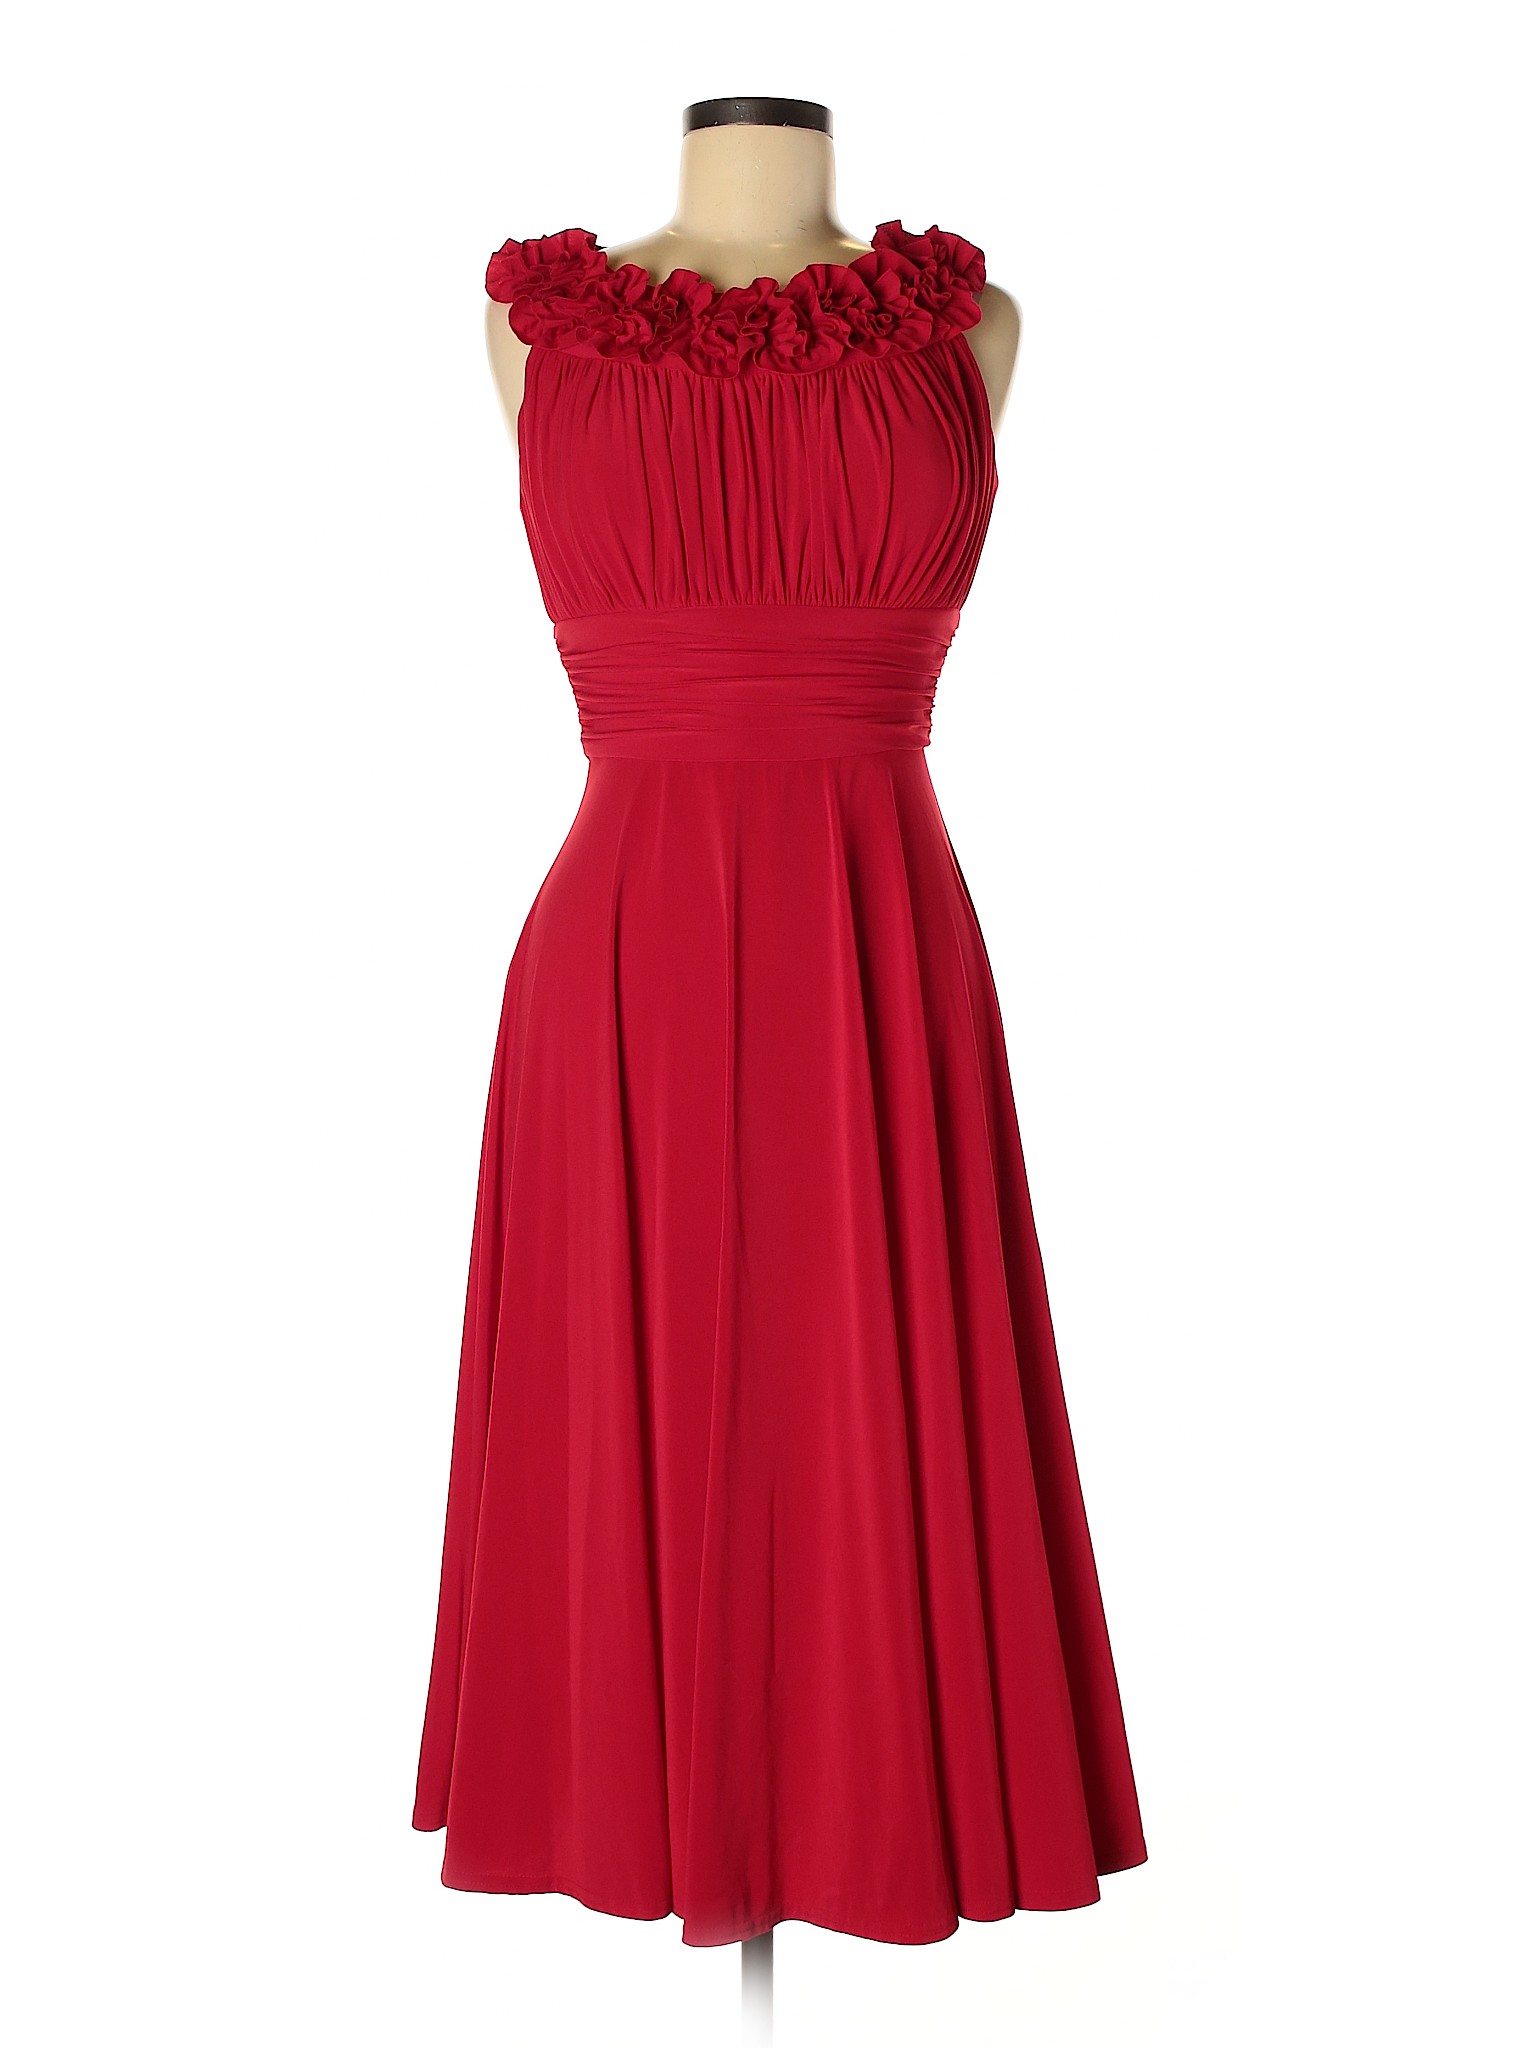 Jessica Howard Women Red Cocktail Dress 6 | eBay